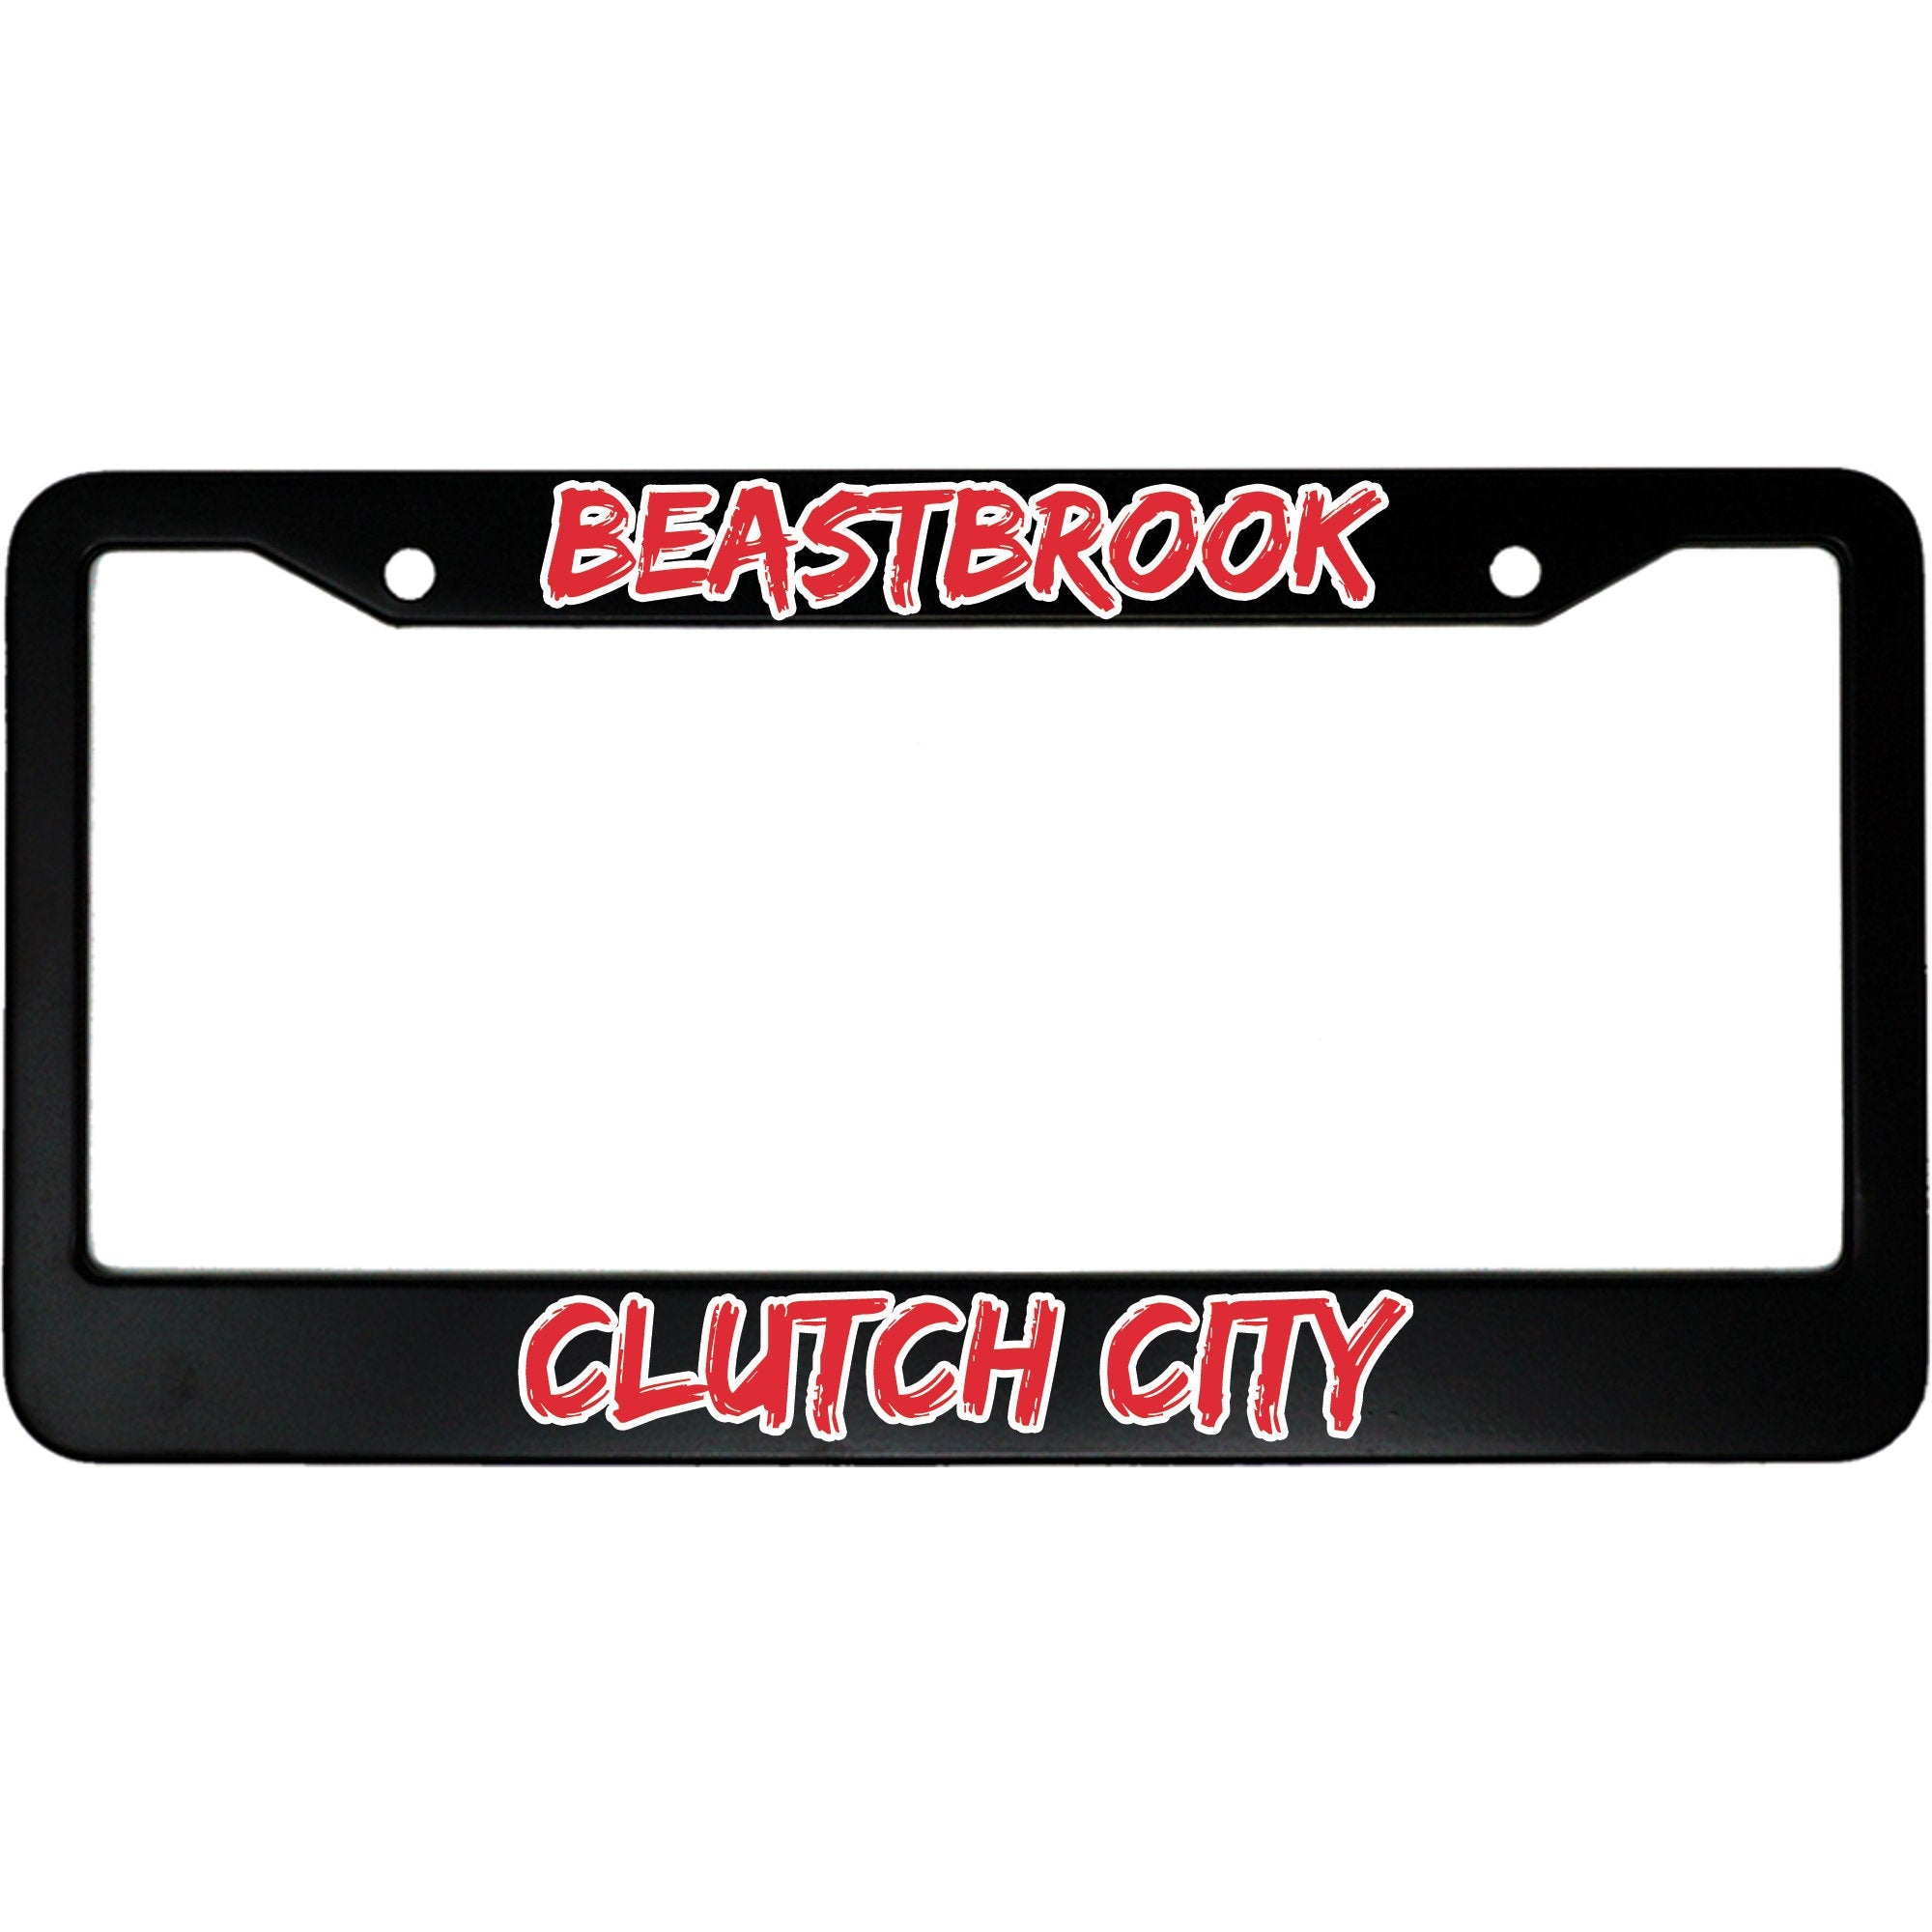 Beastbrook Clutch City